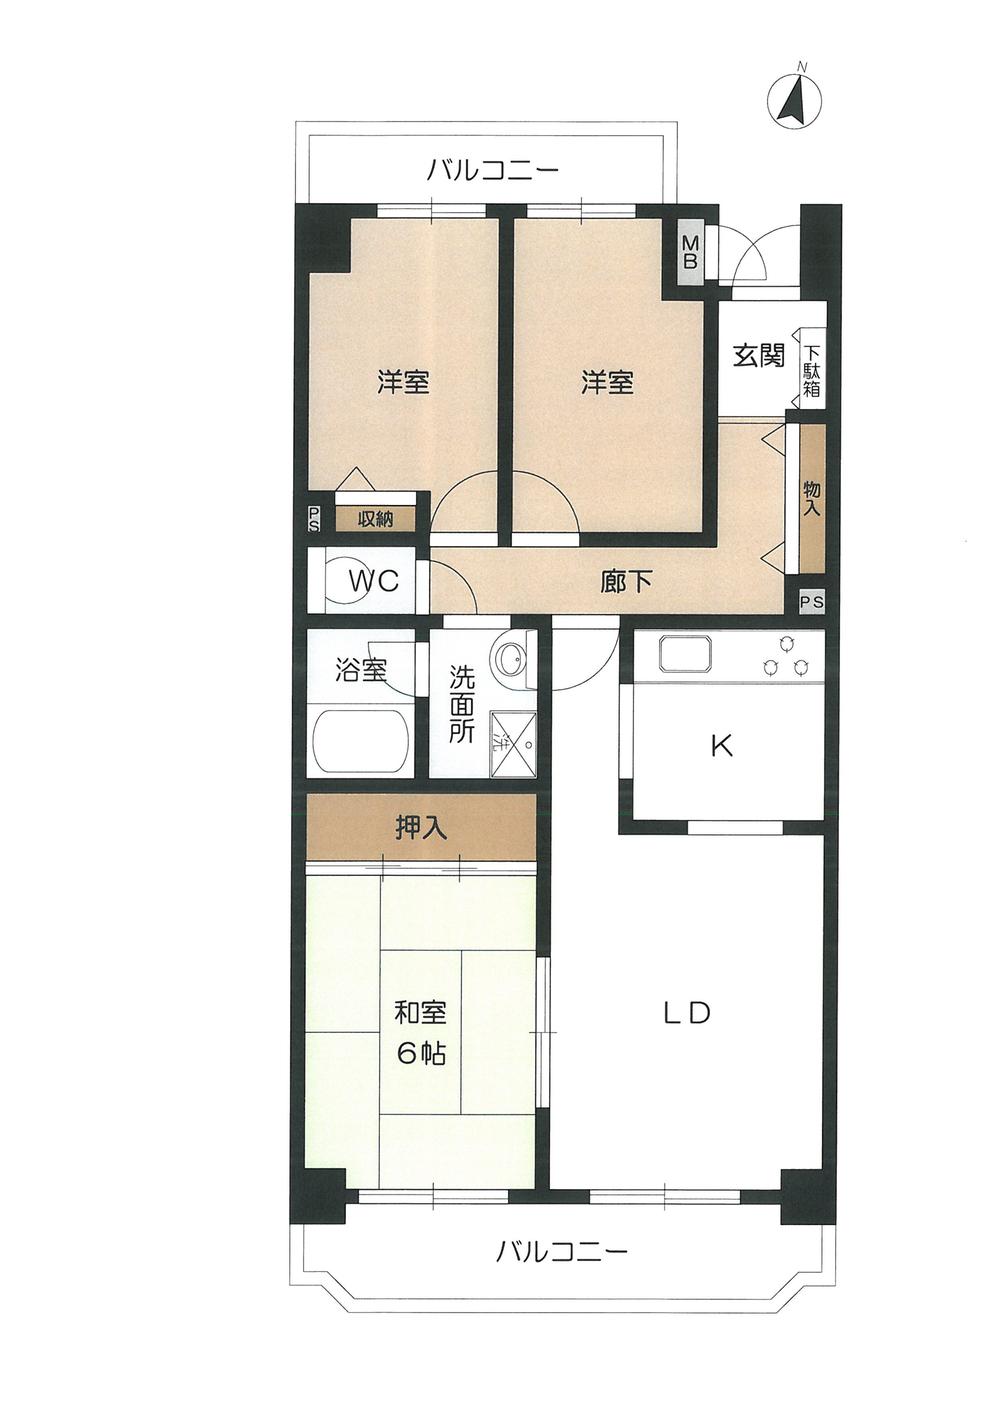 Floor plan. 3LDK, Price 6.9 million yen, Occupied area 62.71 sq m , Balcony area 14.33 sq m